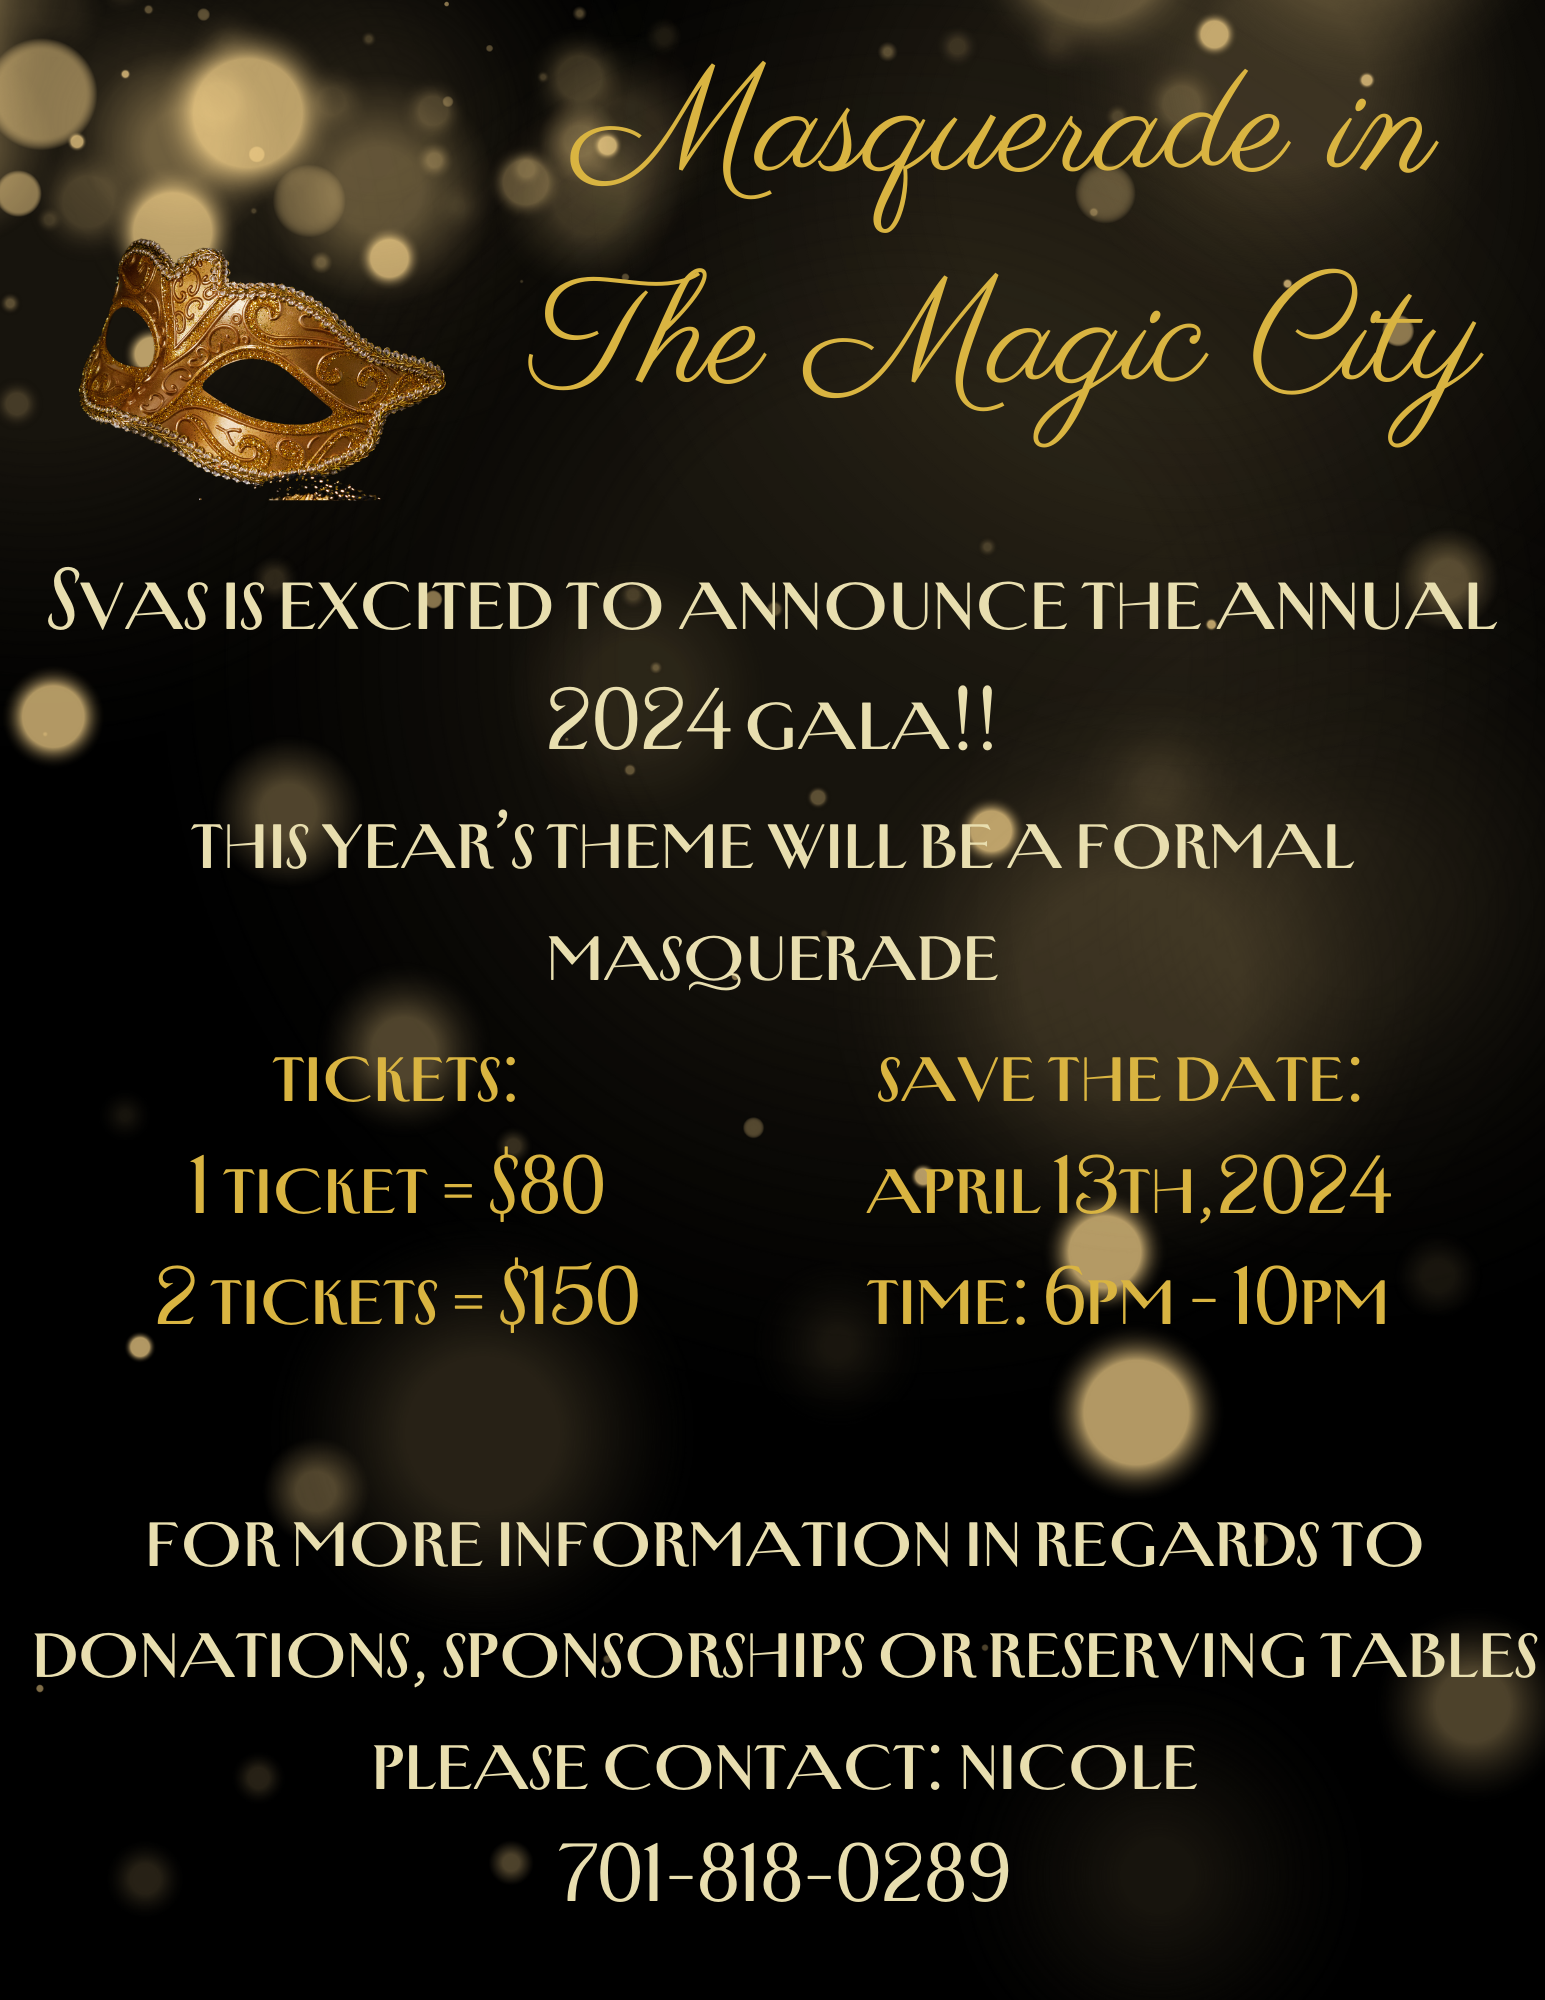 Masquerade in The Magic City Announcement